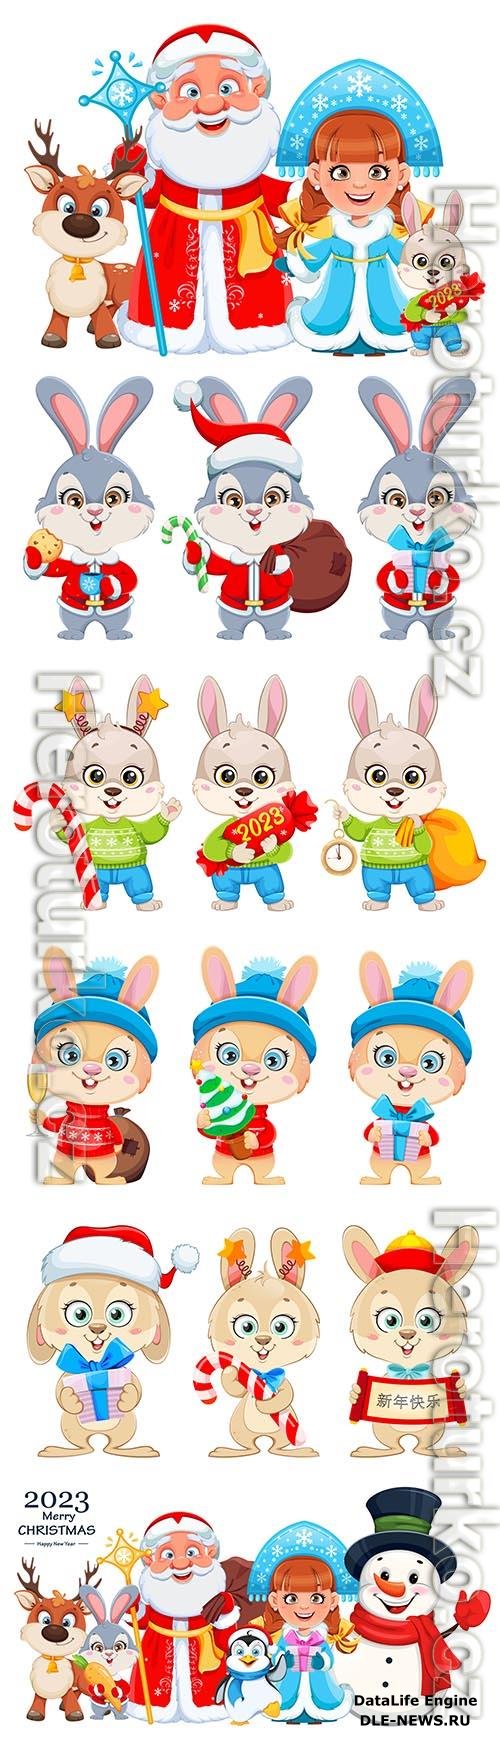 Cute rabbit, santa claus, snow maiden, snowman and cartoon animals christmas vector